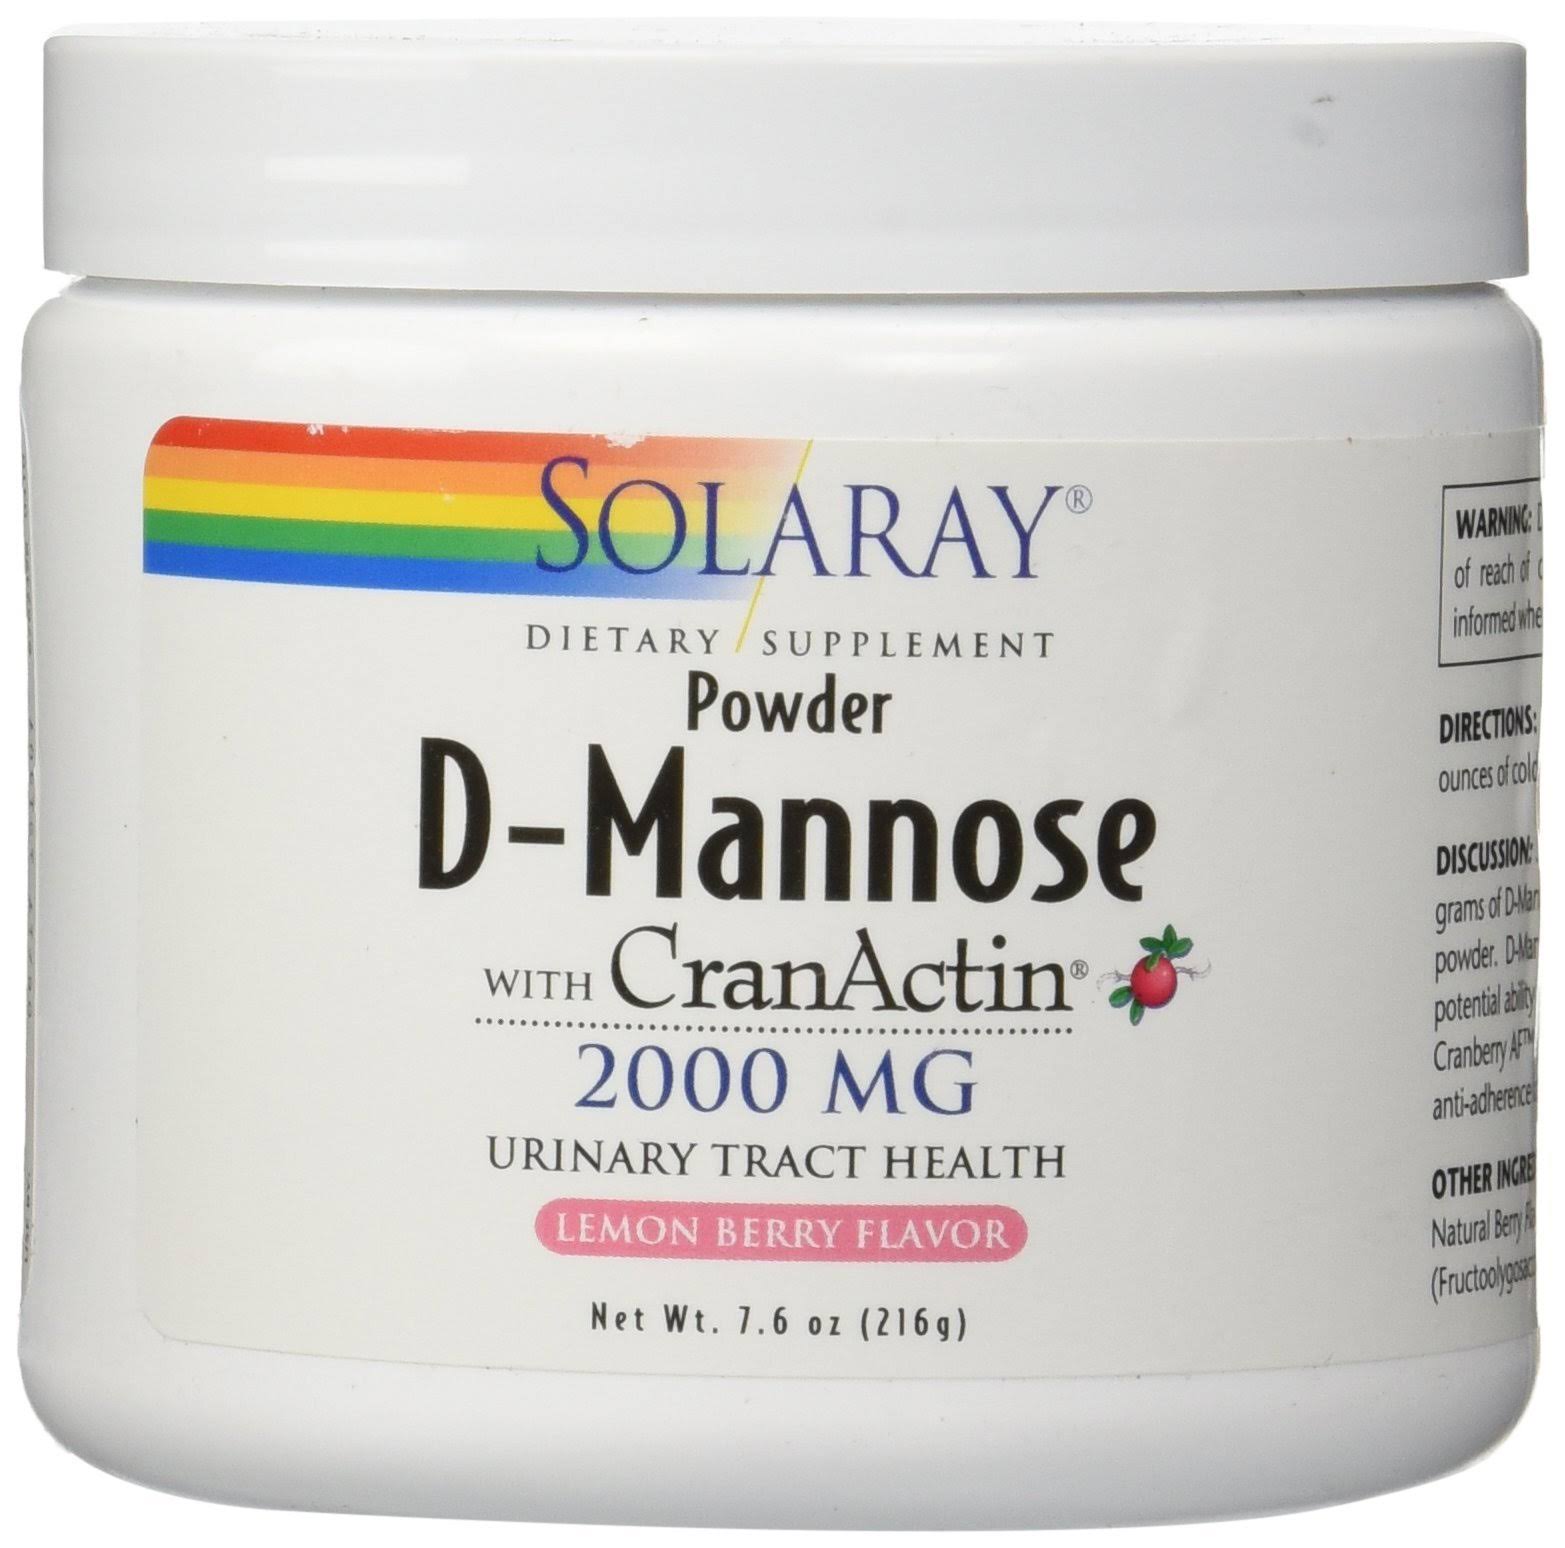 Solaray D-Mannose with CranActin - Lemon Berry Flavor, 7.6oz